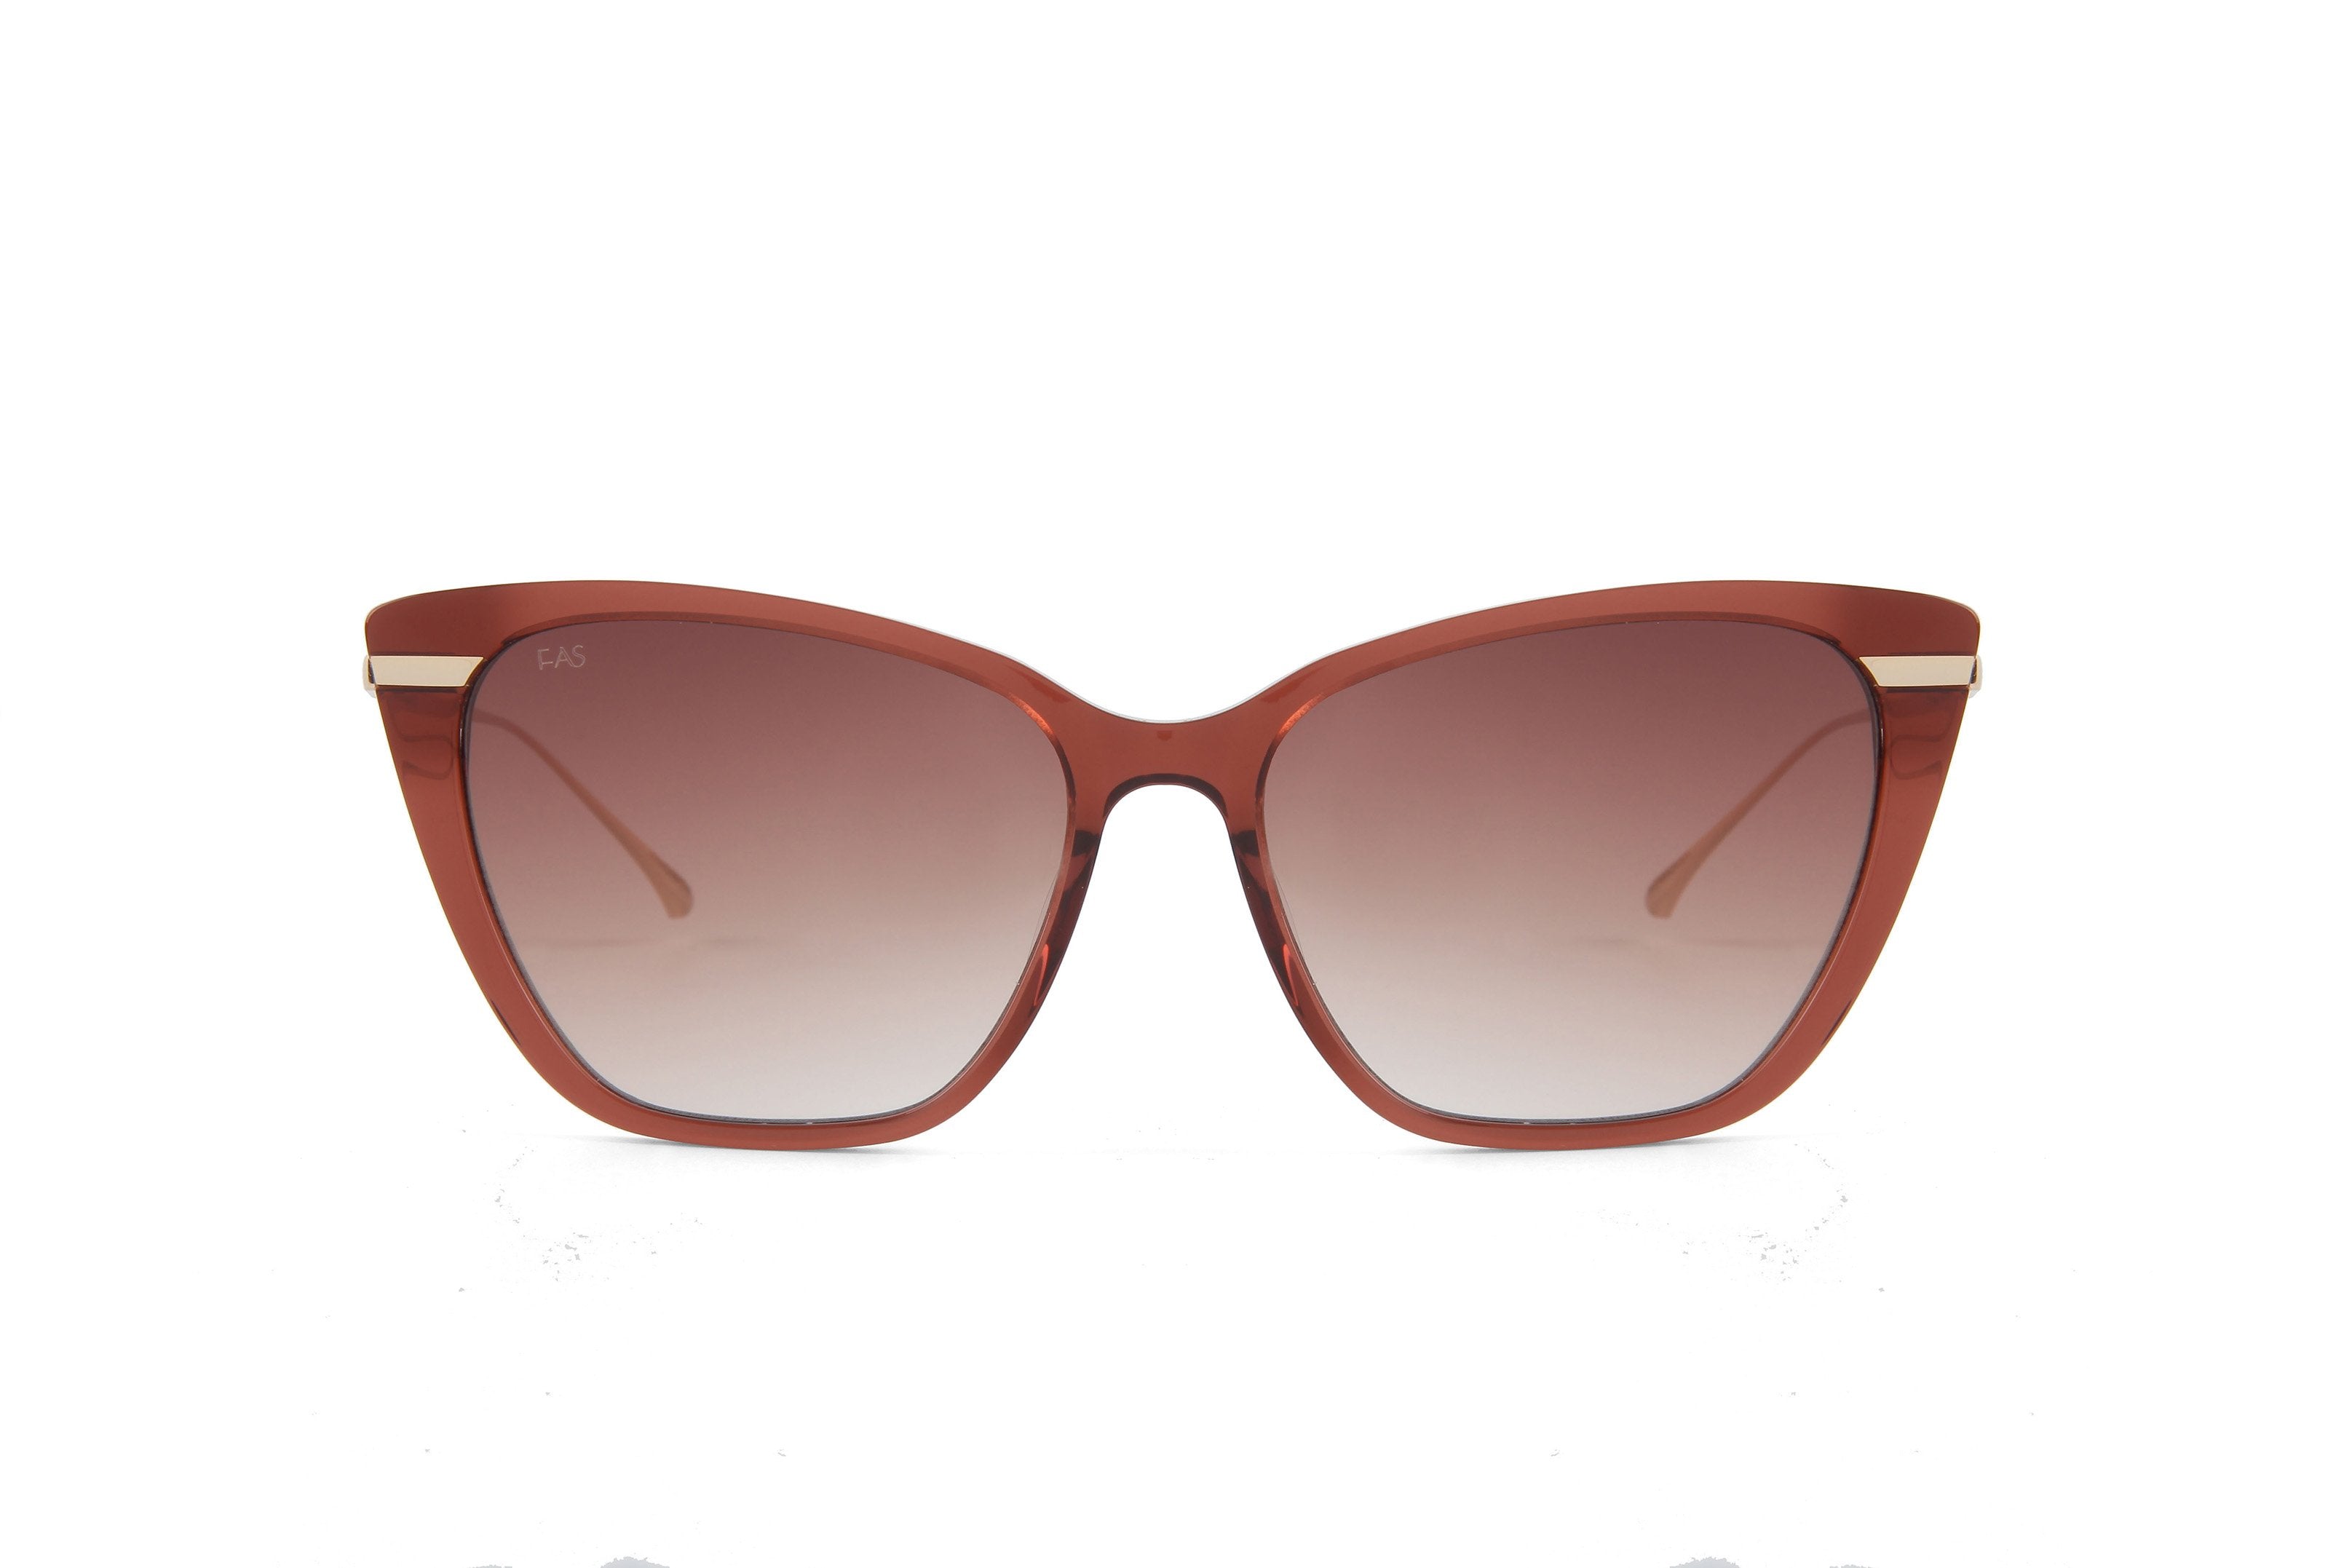 Sunglasses MCM 127 S 001 BLACK : Amazon.ca: Clothing, Shoes & Accessories